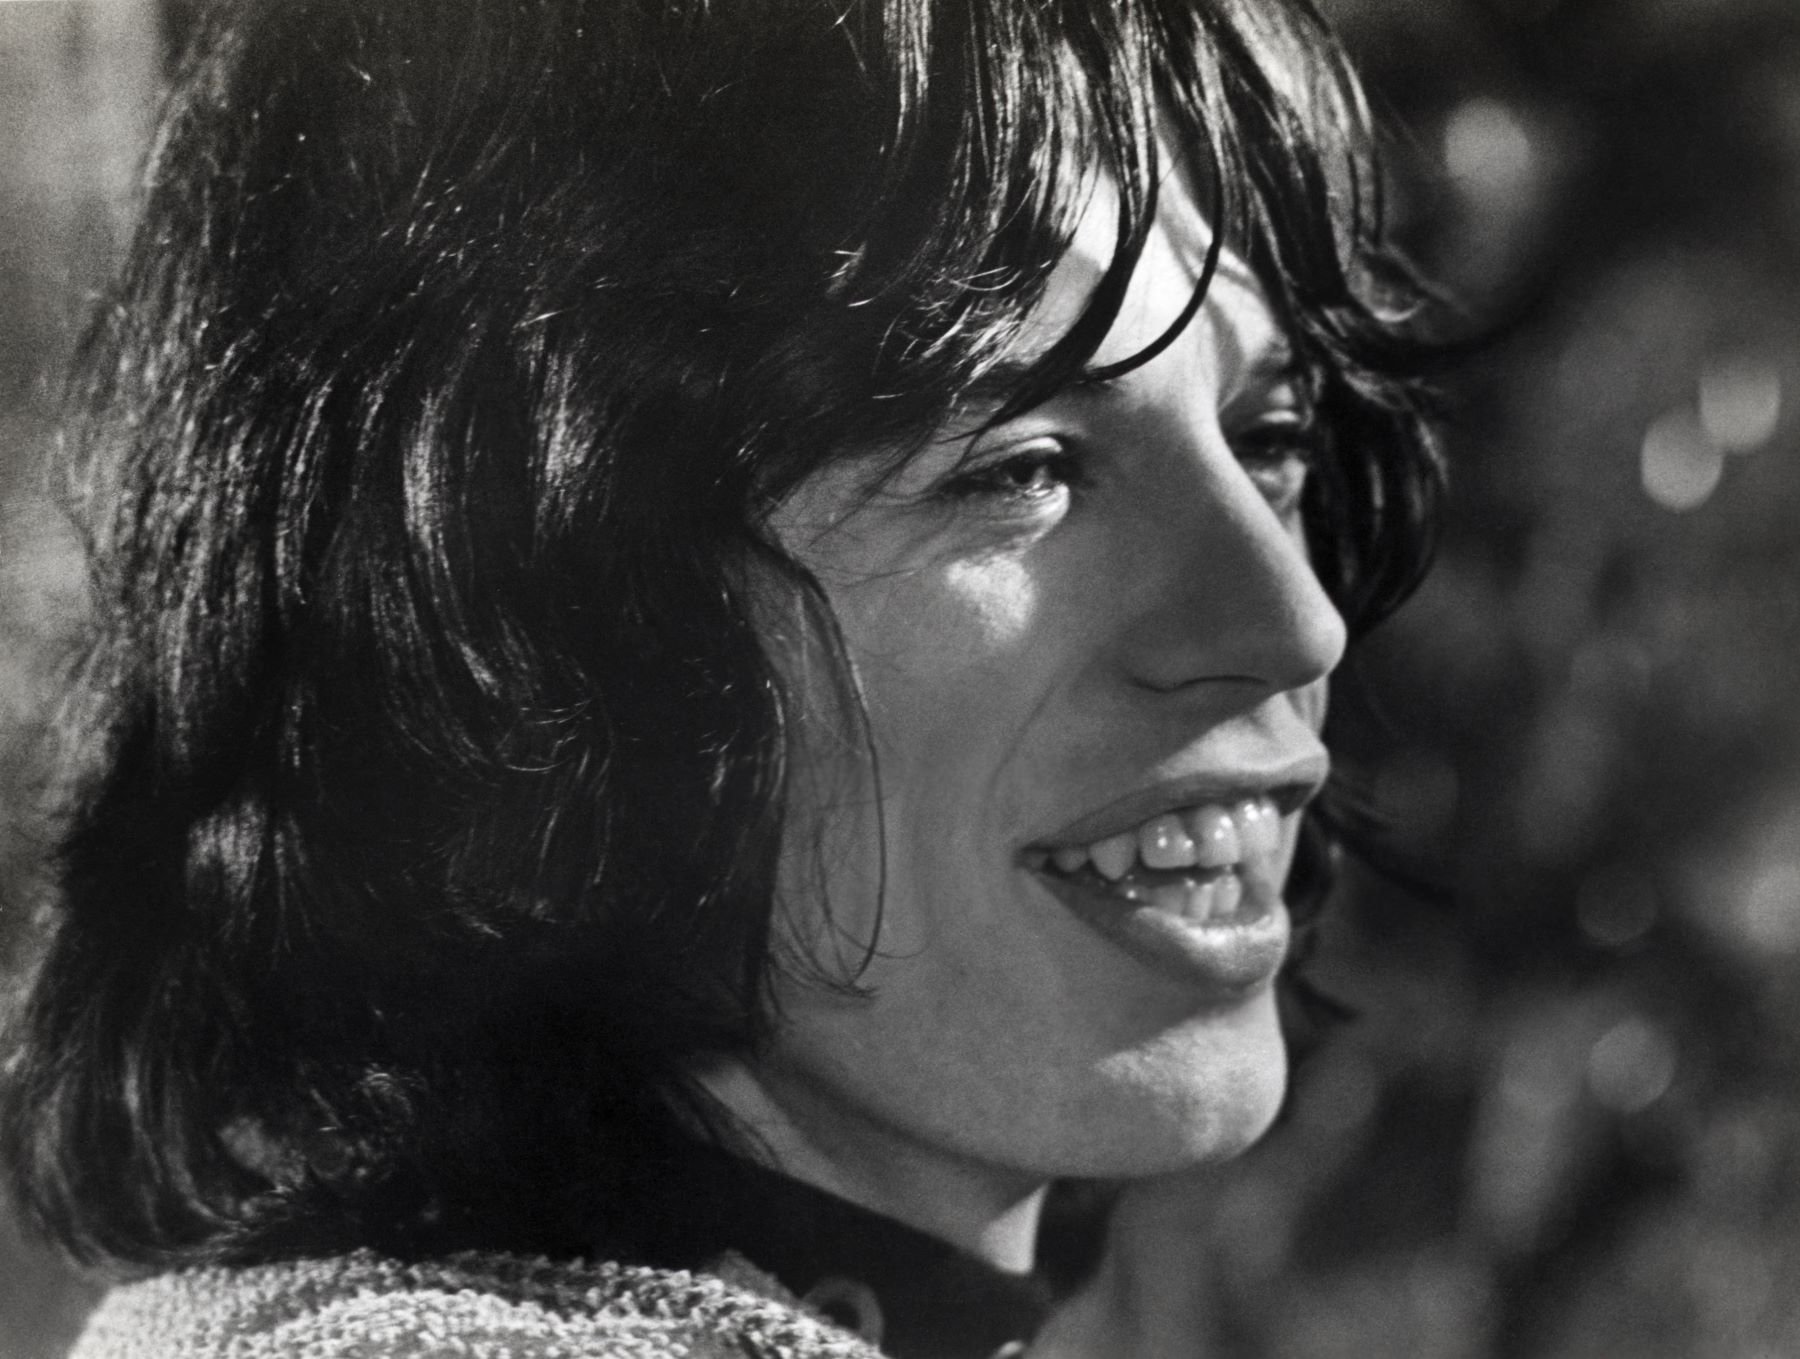 Mick Jagger giving a toothy smile circa 1963-1970